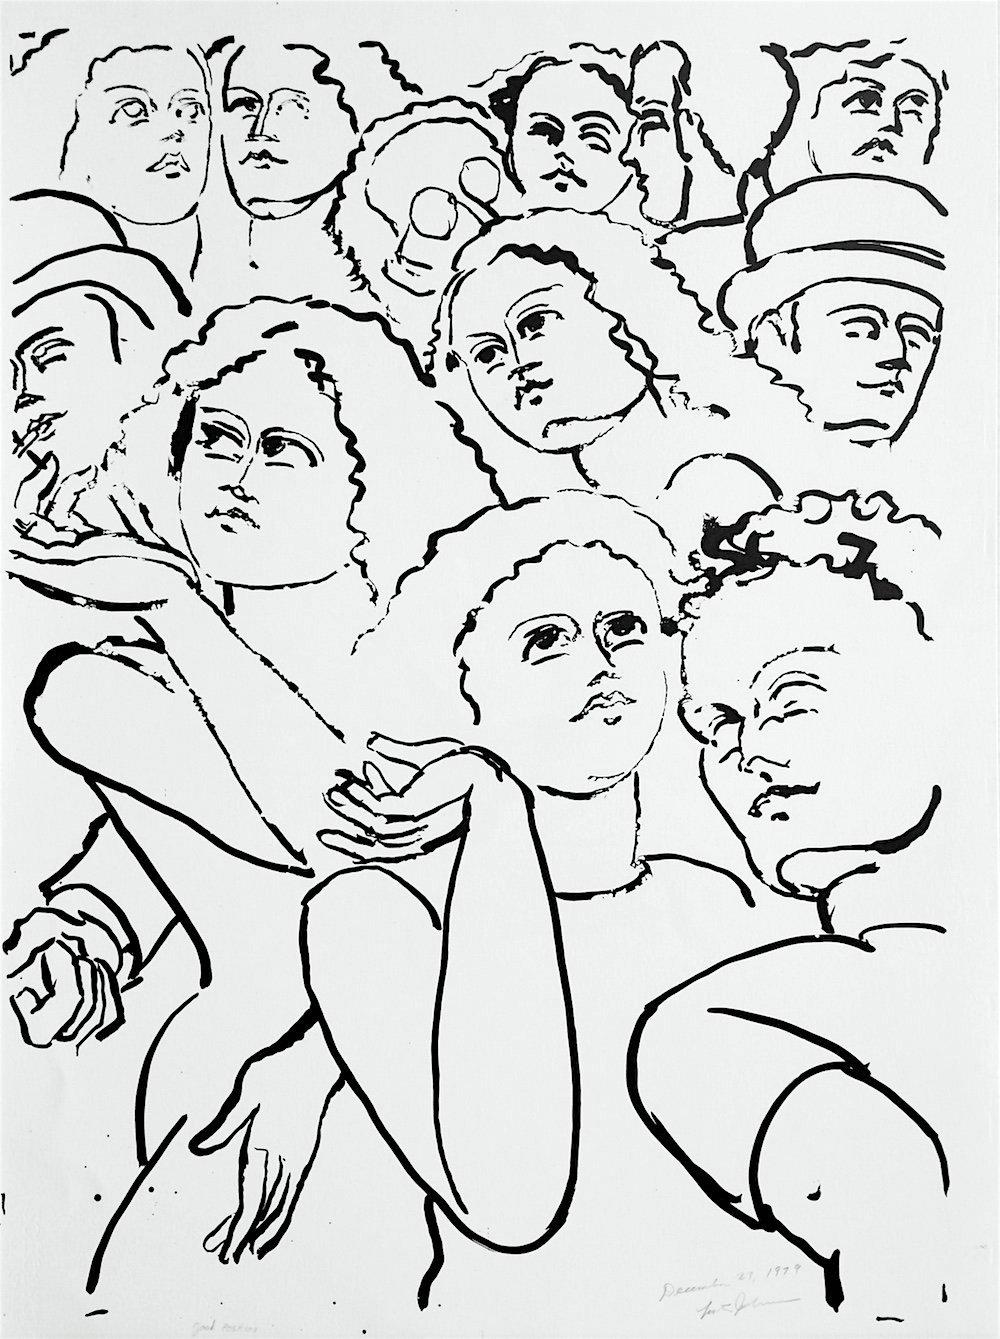 Lester Johnson Figurative Print - NY STREET SCENE I Signed Lithograph, City Crowd Portrait, Black Line Drawing